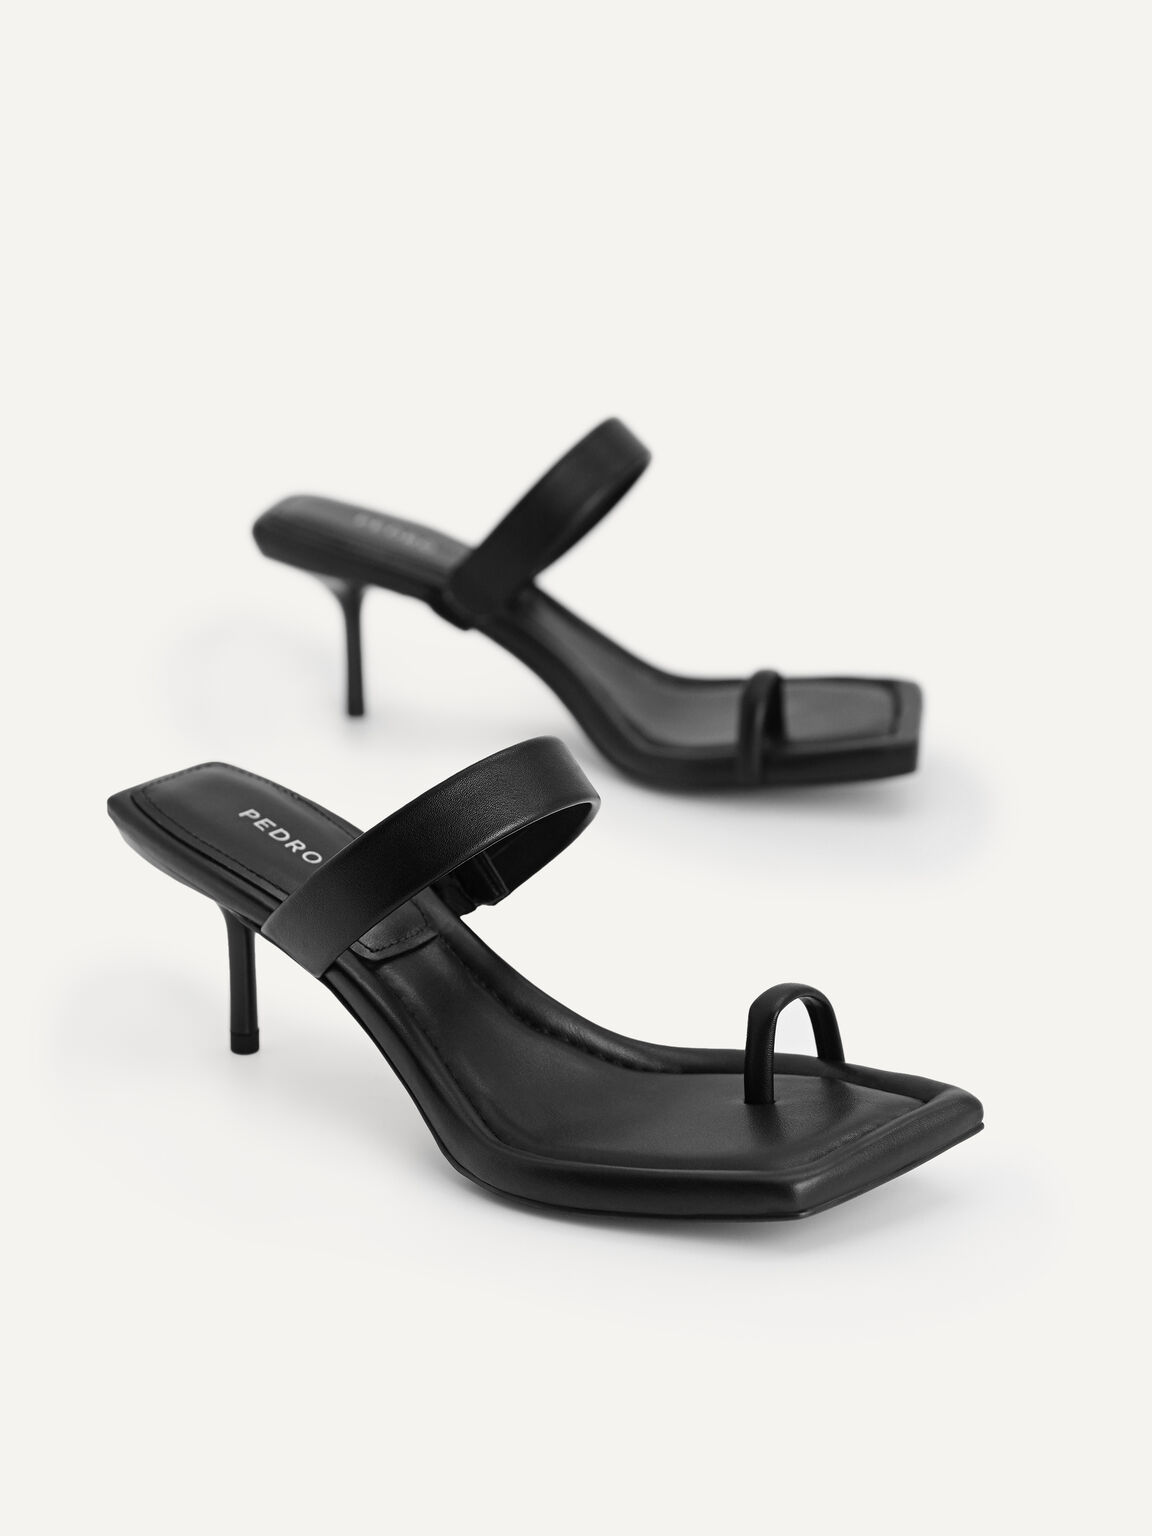 Strappy Toe Loop Heeled Sandals, Black, hi-res